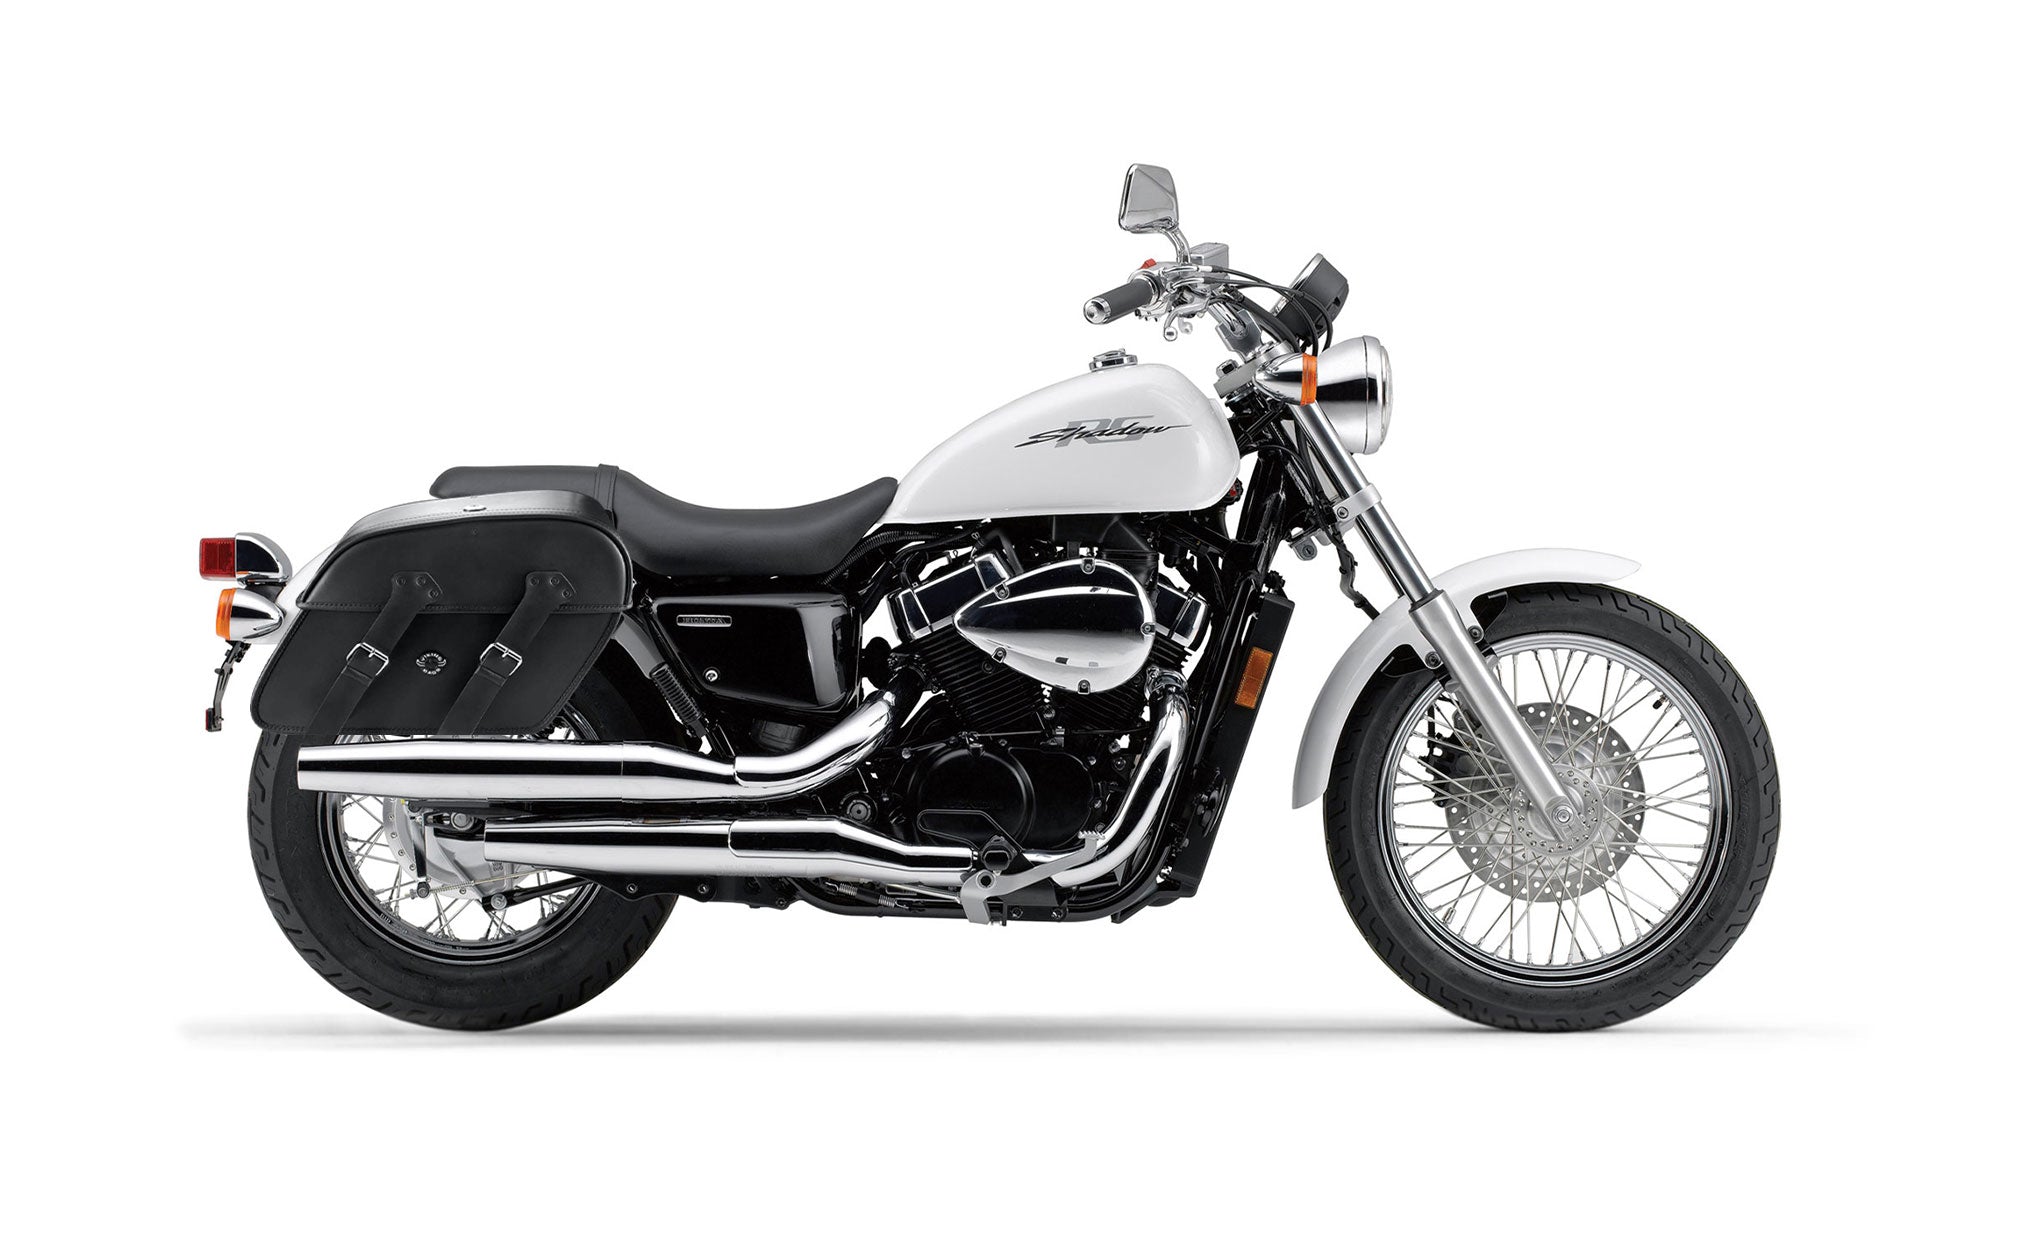 Viking Raven Extra Large Honda Shadow 750 Rs Shock Cut Out Leather Motorcycle Saddlebags on Bike Photo @expand